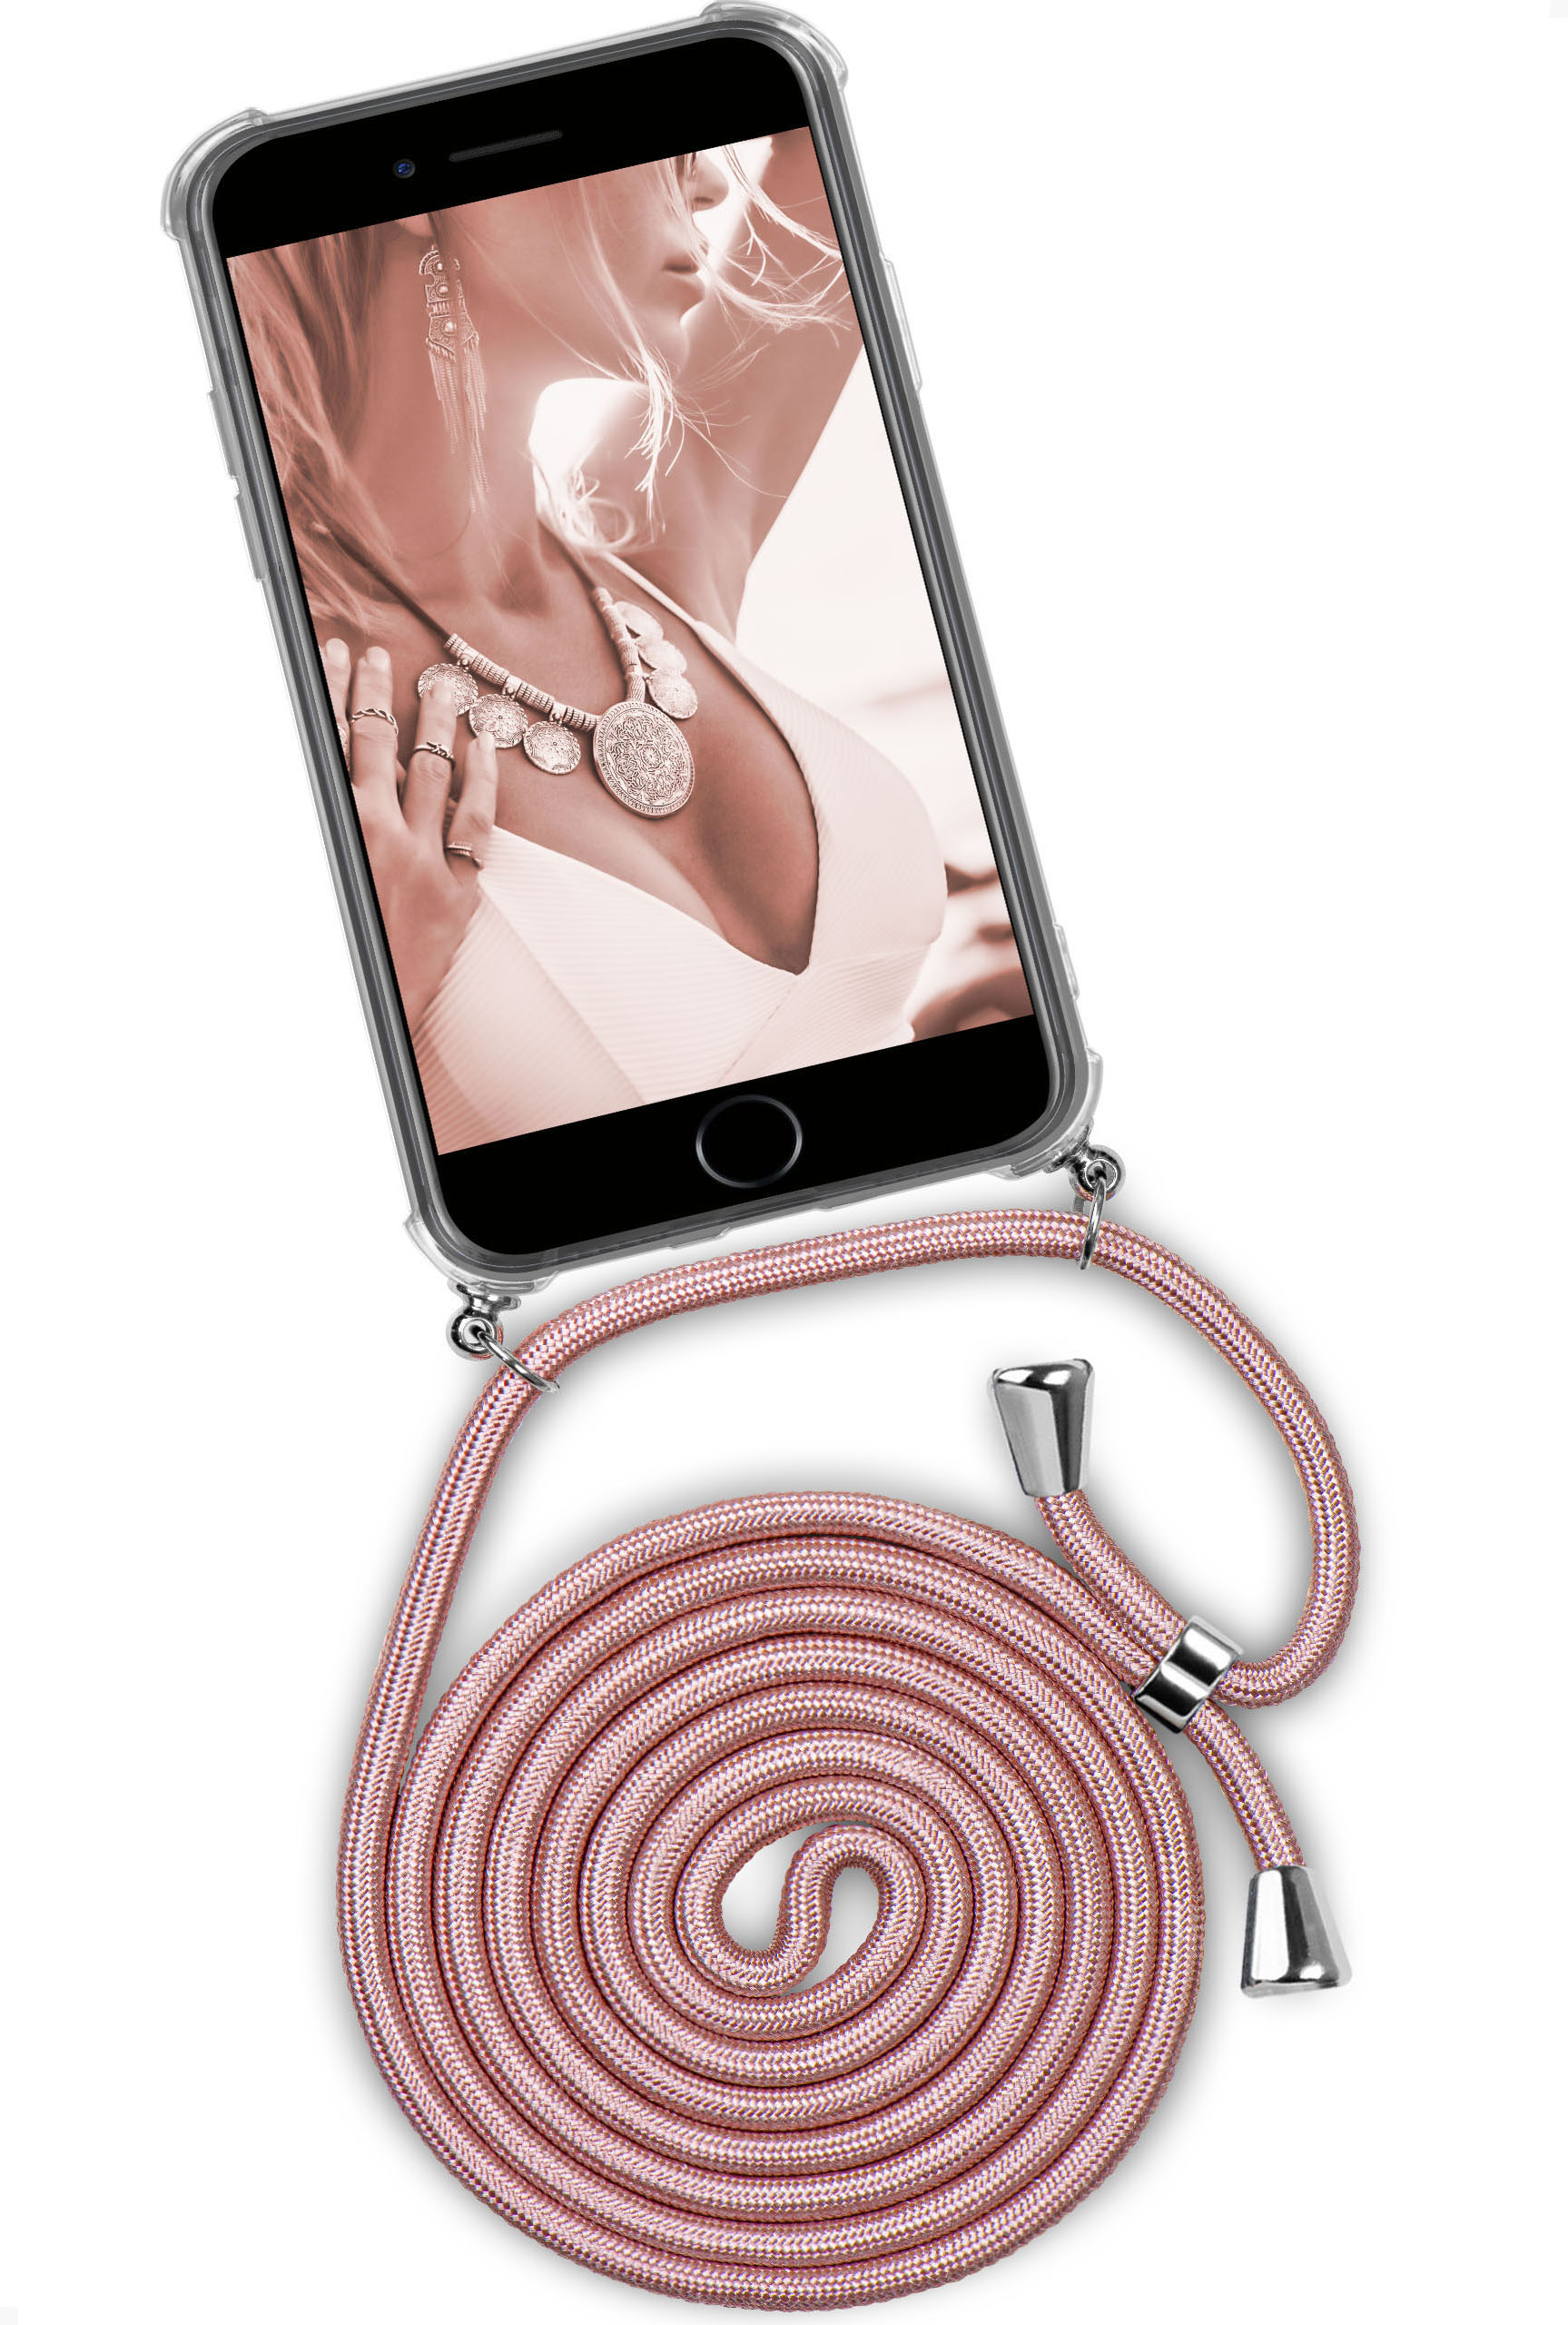 Plus Apple, Plus, Twist Case, Umhängetasche, ONEFLOW / (Silber) iPhone 8 7 iPhone Shiny Blush